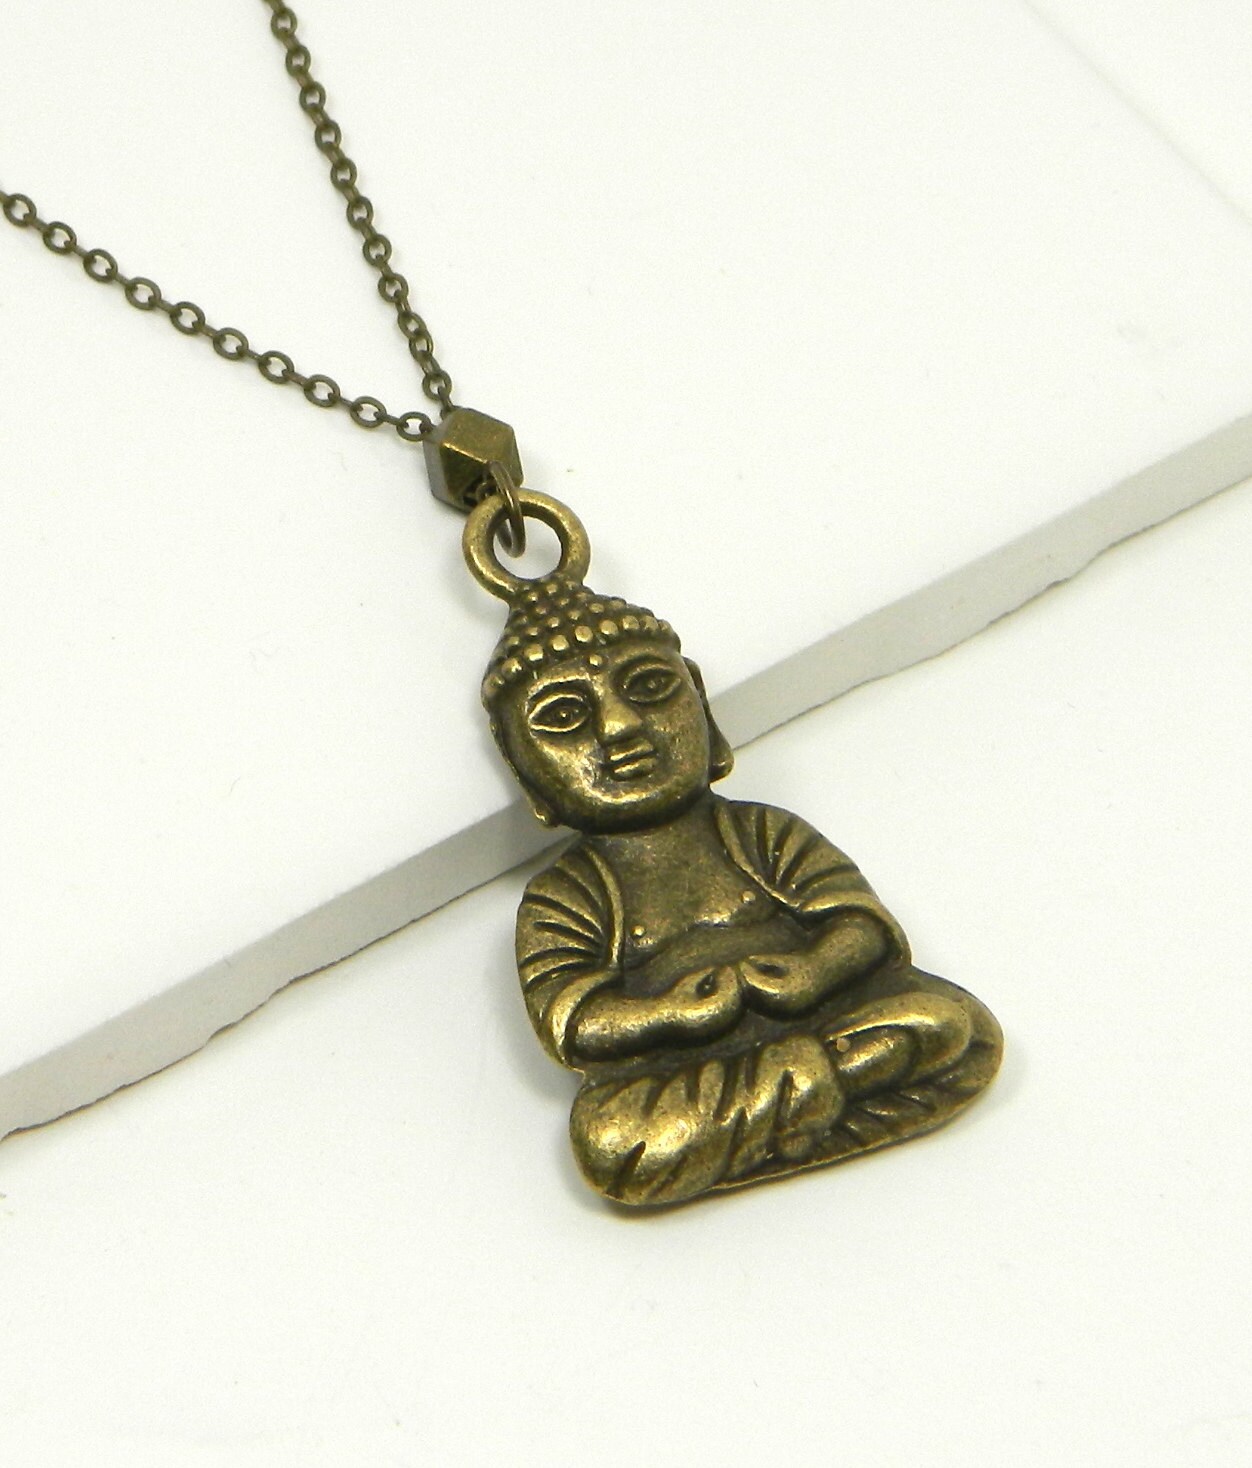 Seated Buddha Necklace Buddha Jewelry by Prdgy on Etsy